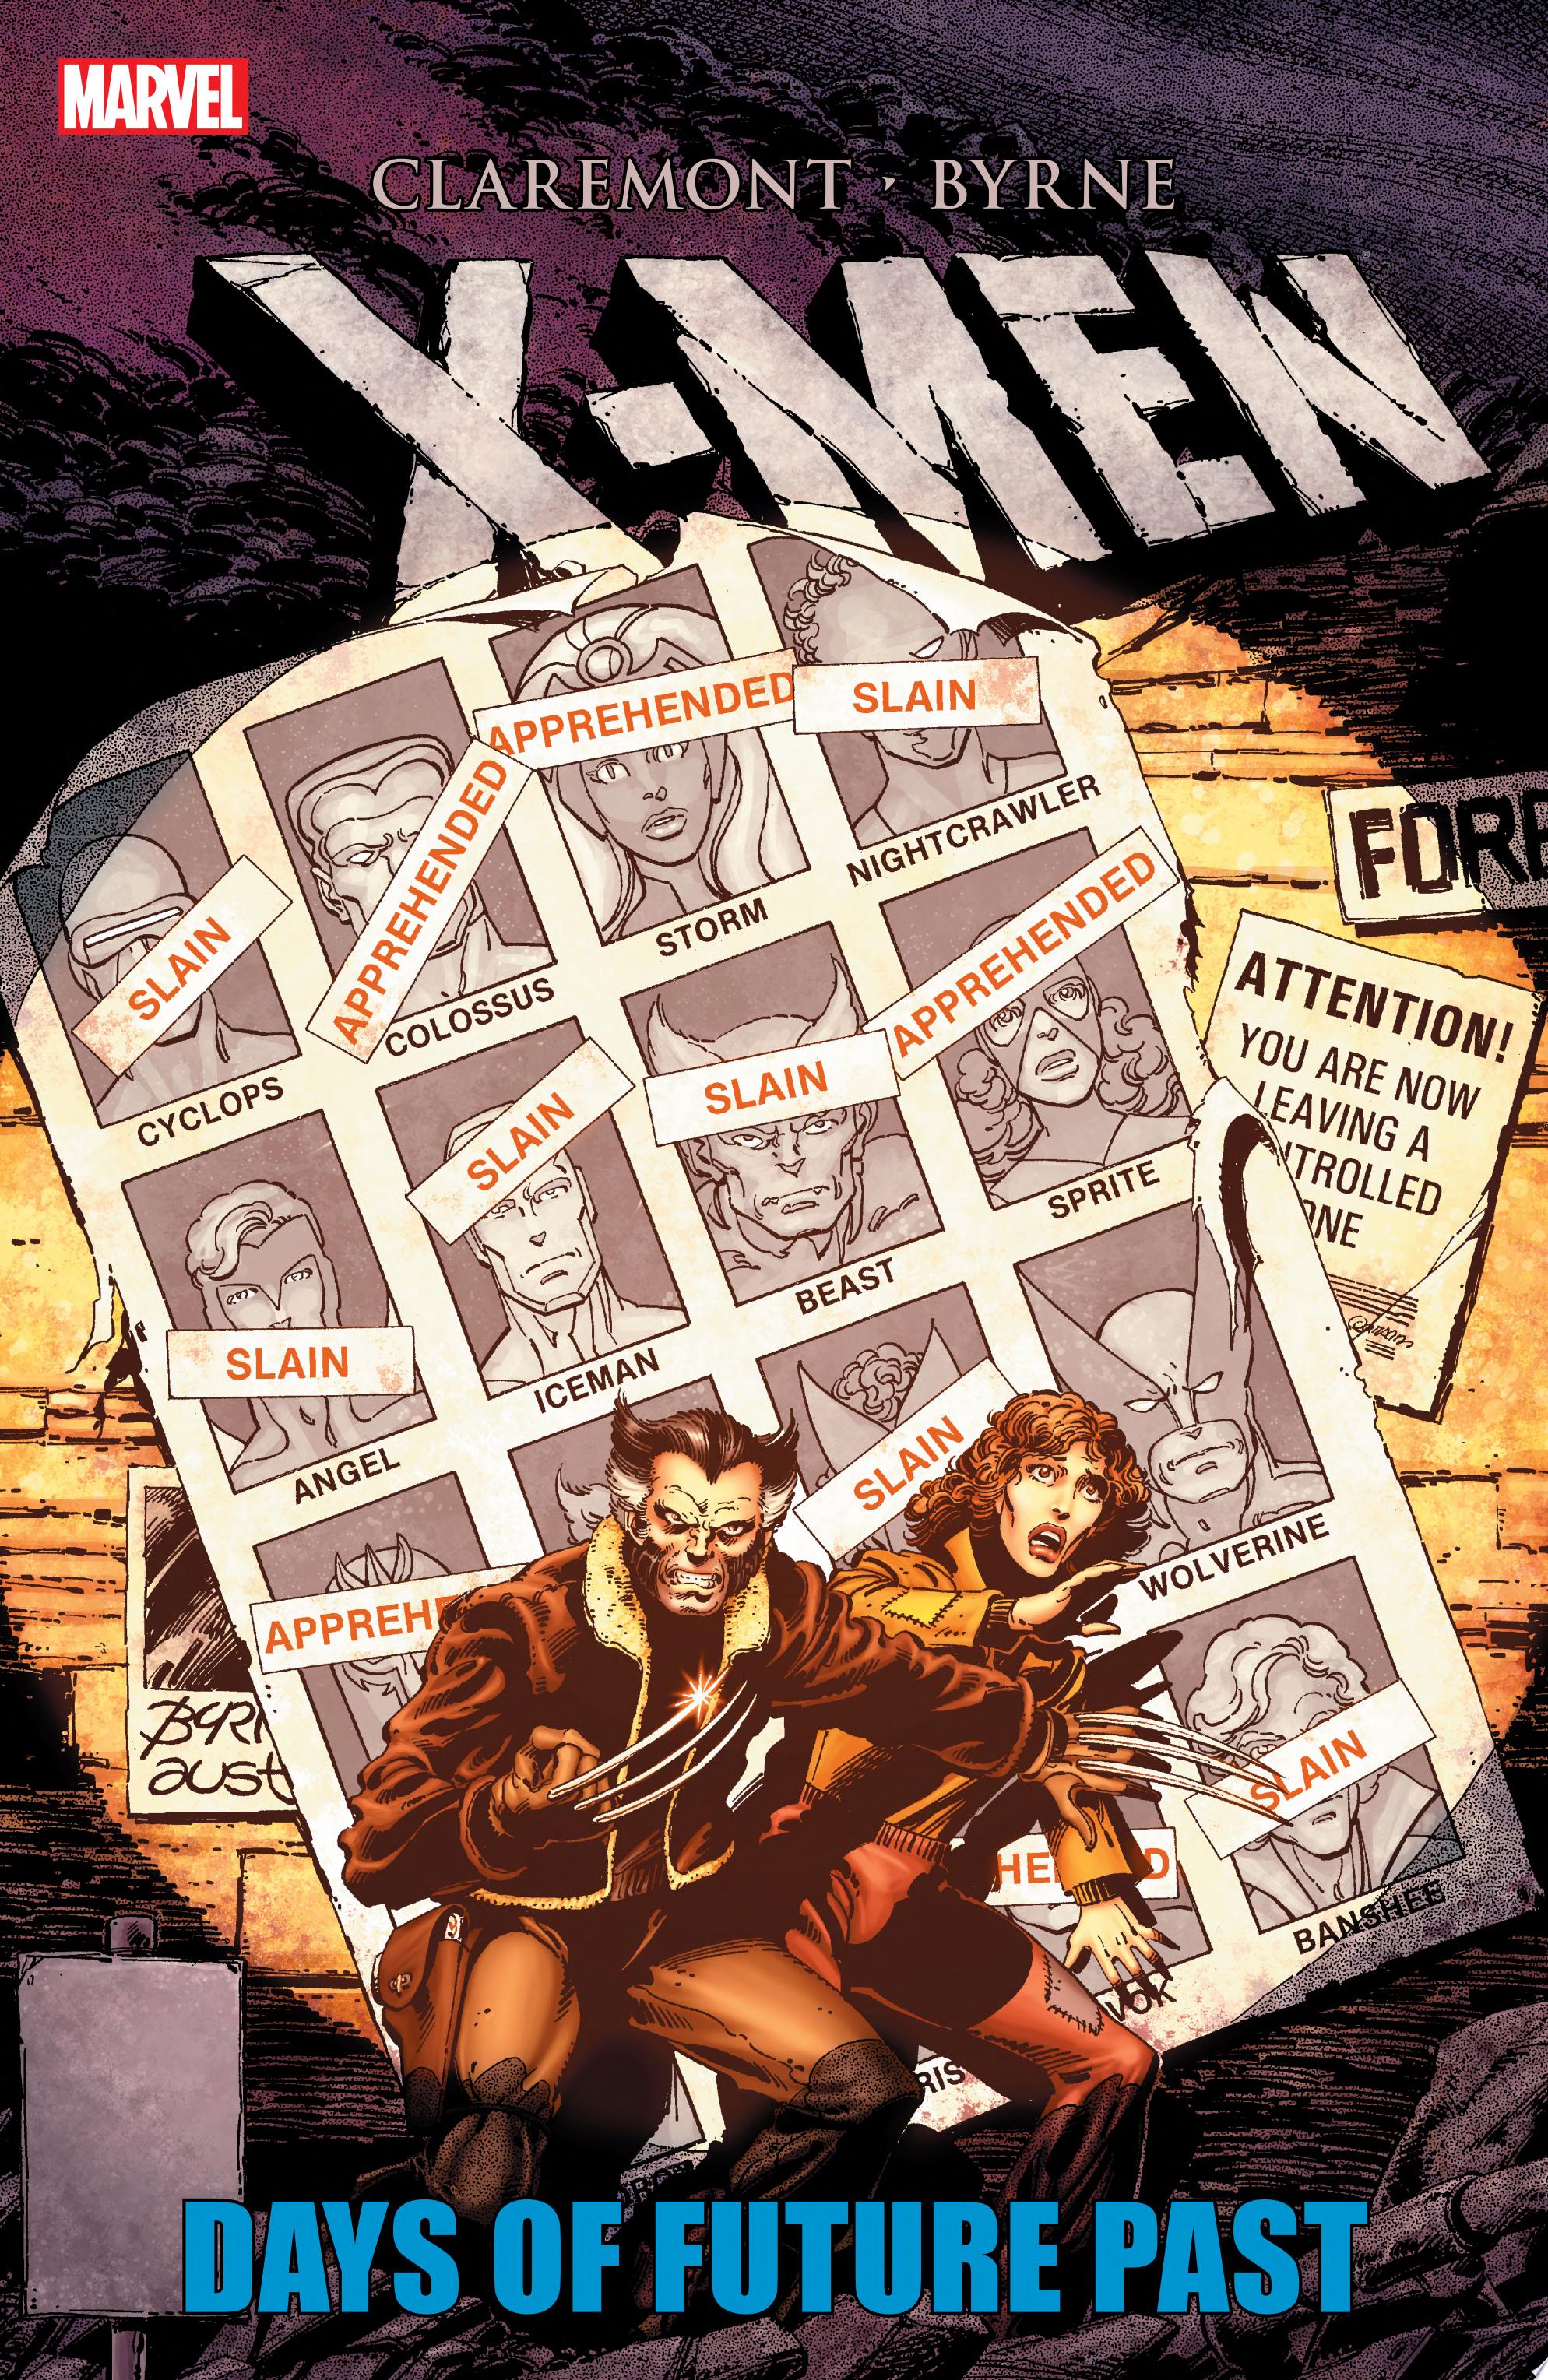 Image for "X-Men"